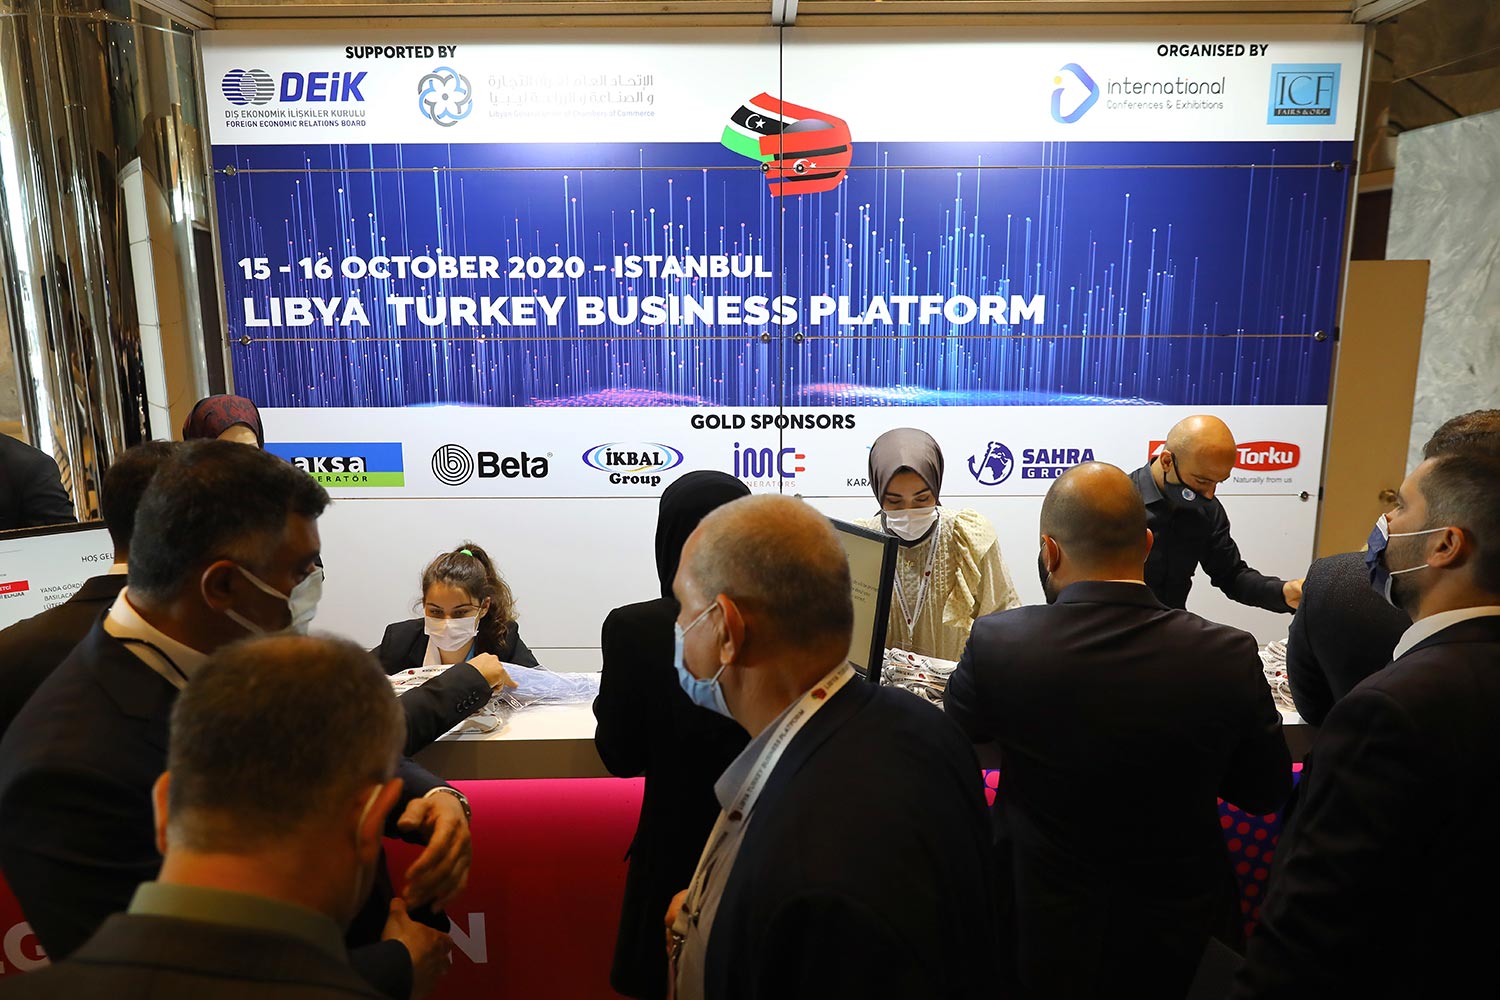 Libya Turkey Business Platform 2020